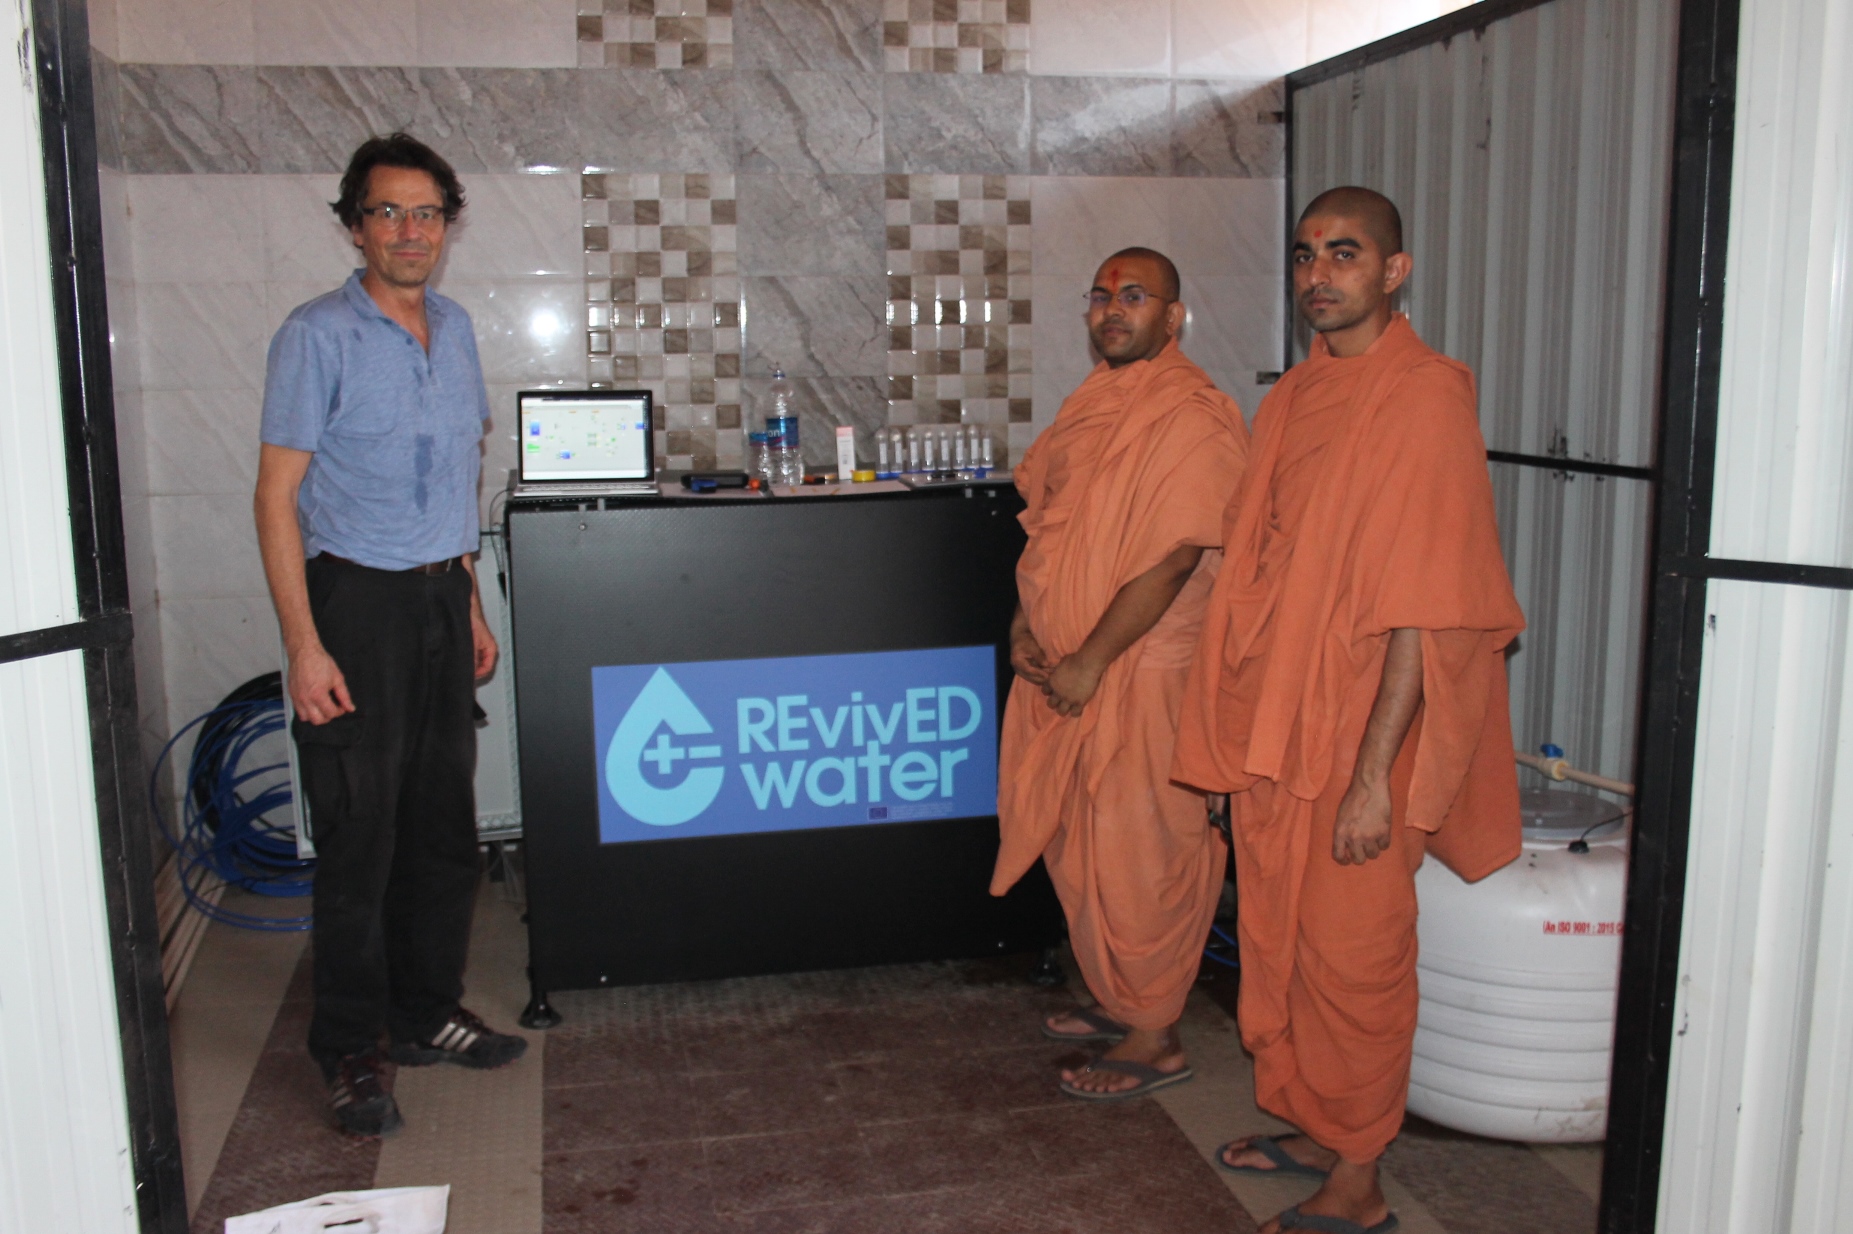 Hindu monks visit the installation.